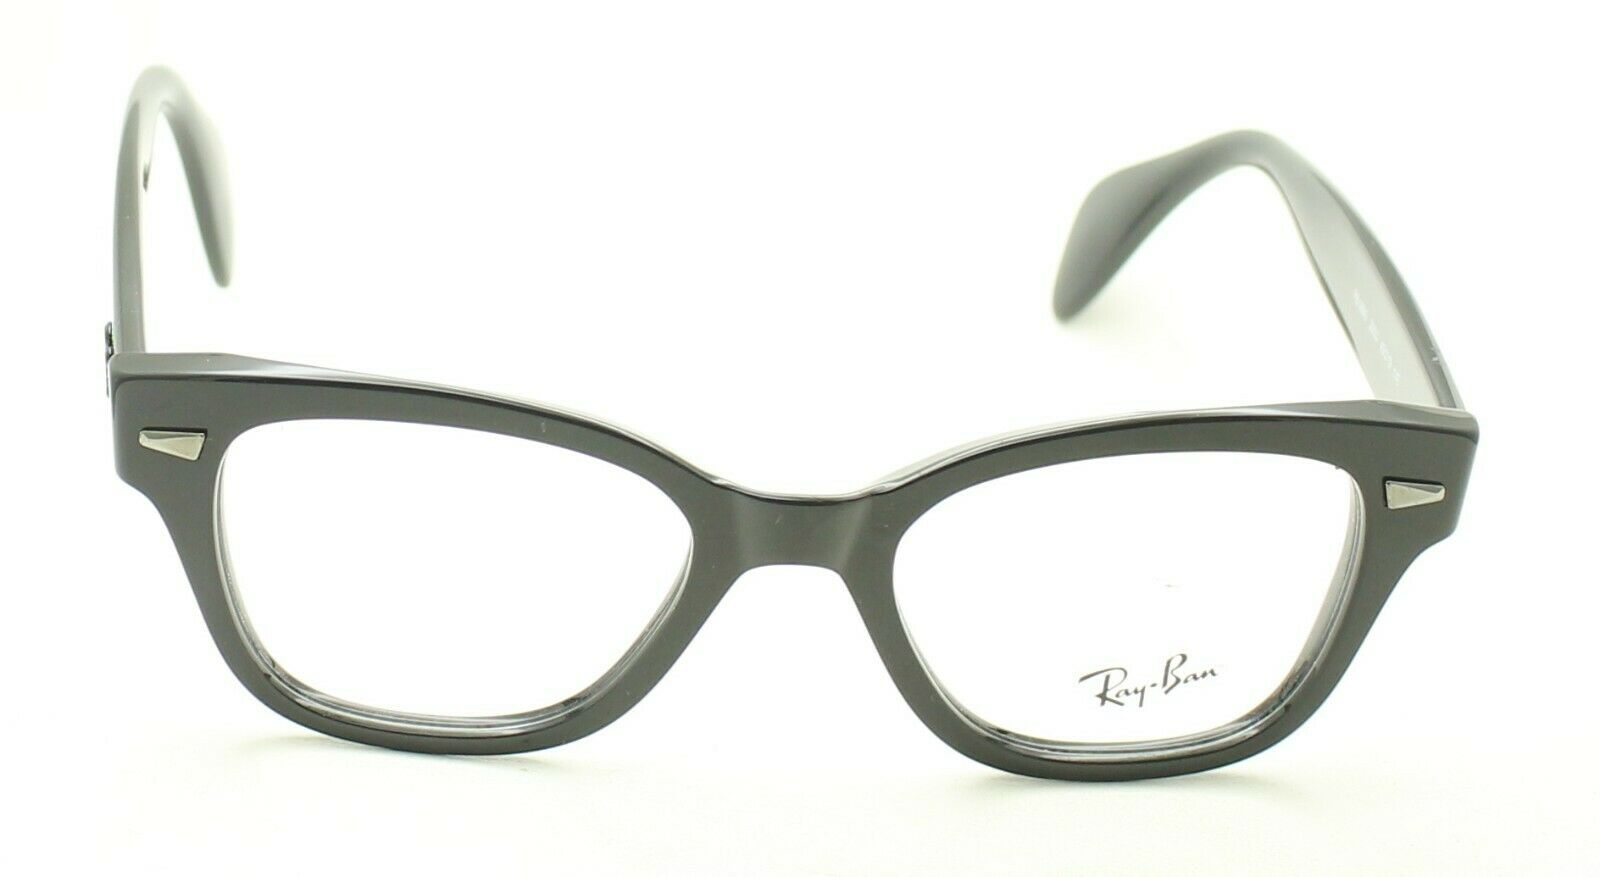 RAY BAN RB 0880 2000 49mm FRAMES RAYBAN Glasses RX Optical Eyewear Eyeglasses